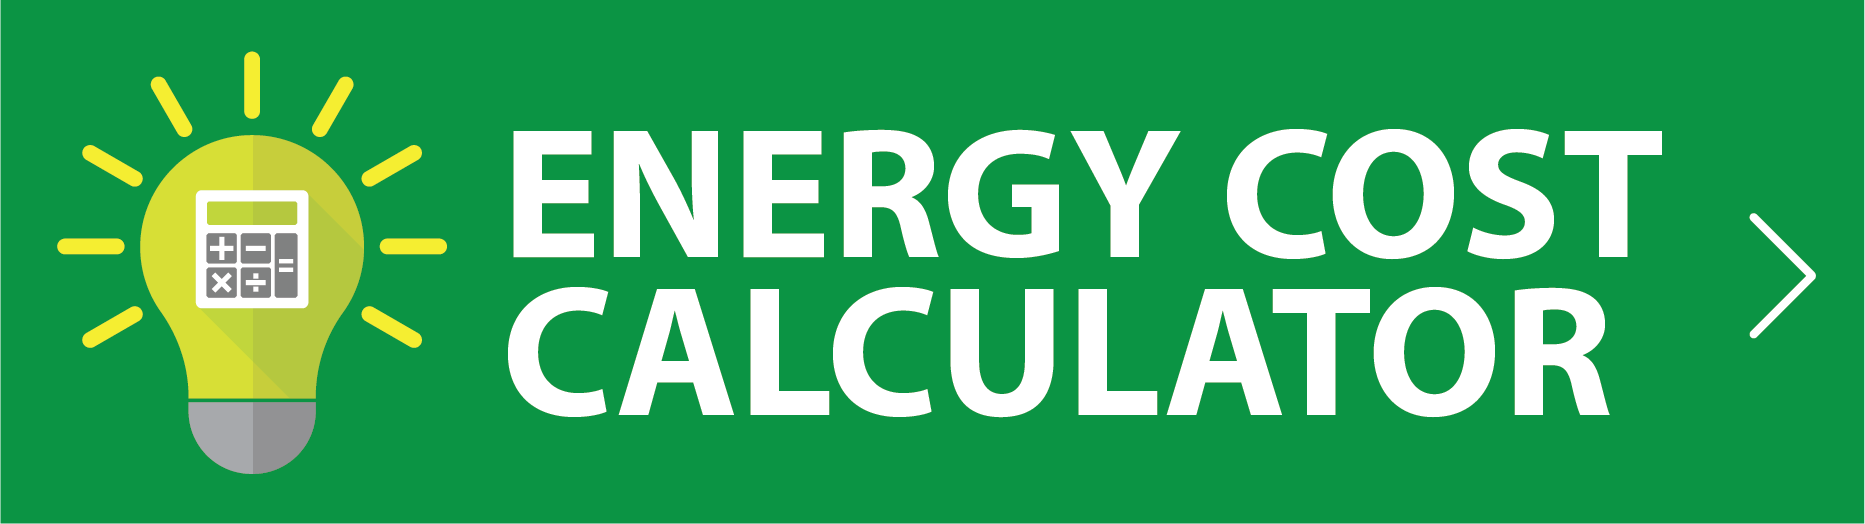 energy cost calculator